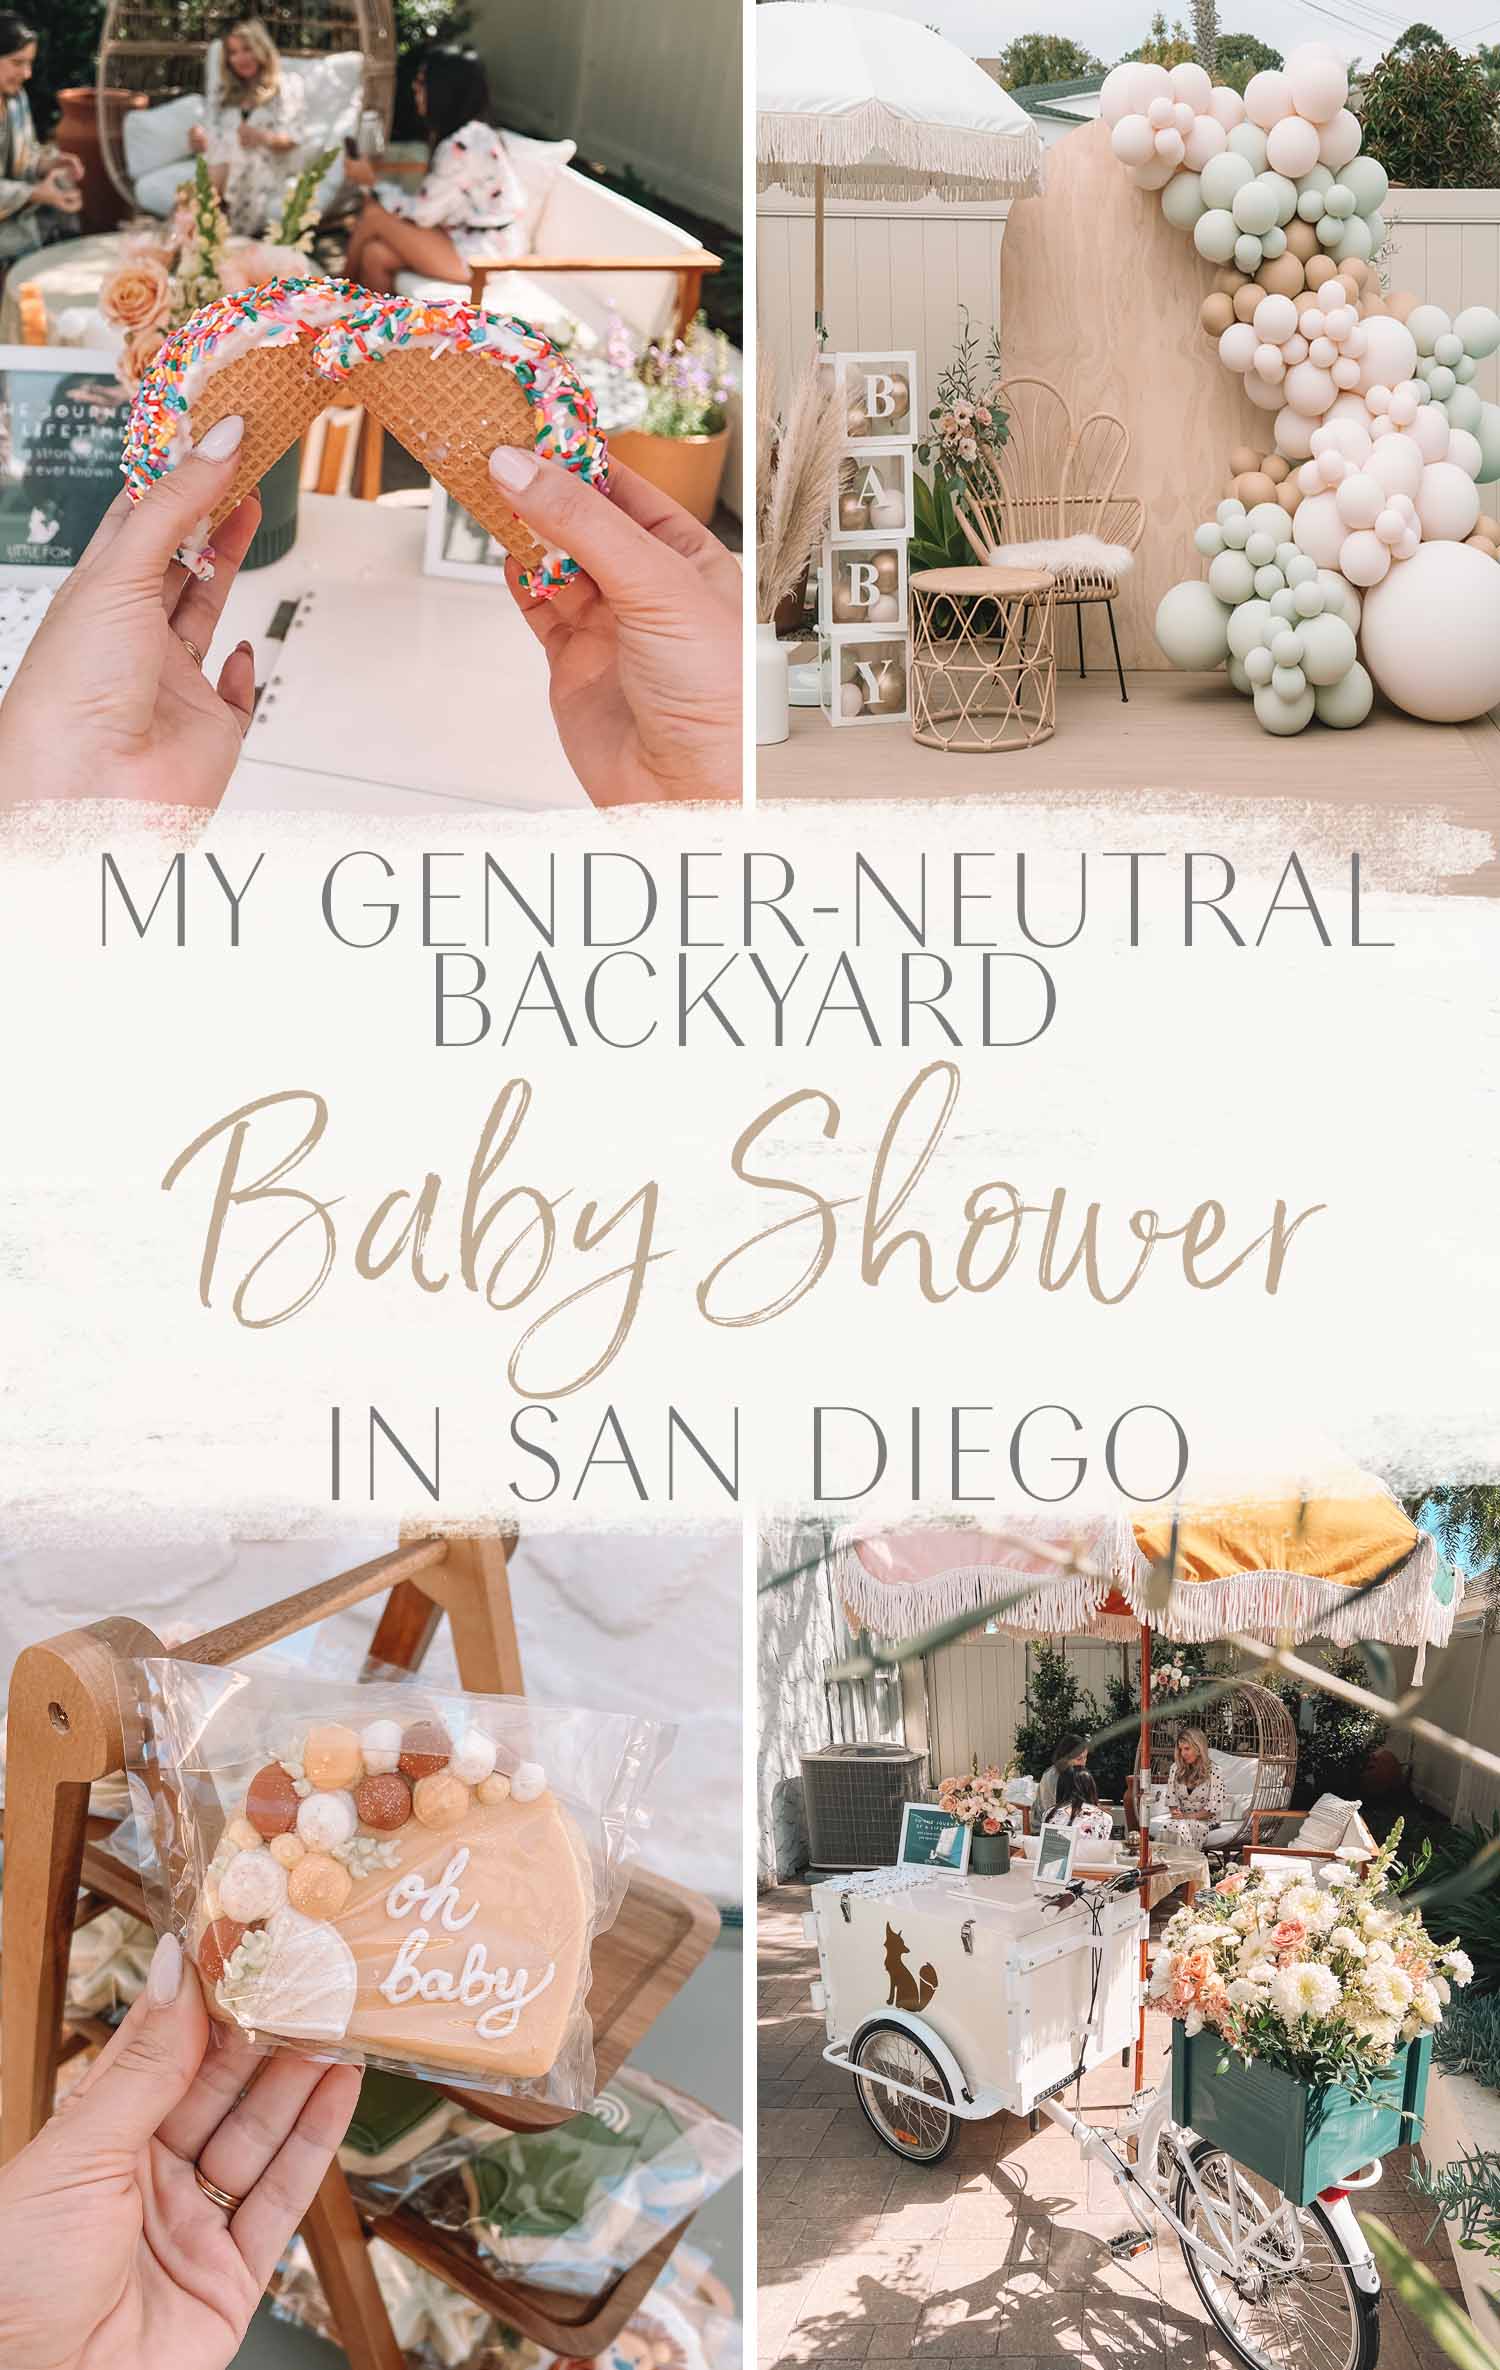 My Gender-Neutral Backyard Baby Shower in San Diego • The Blonde Abroad